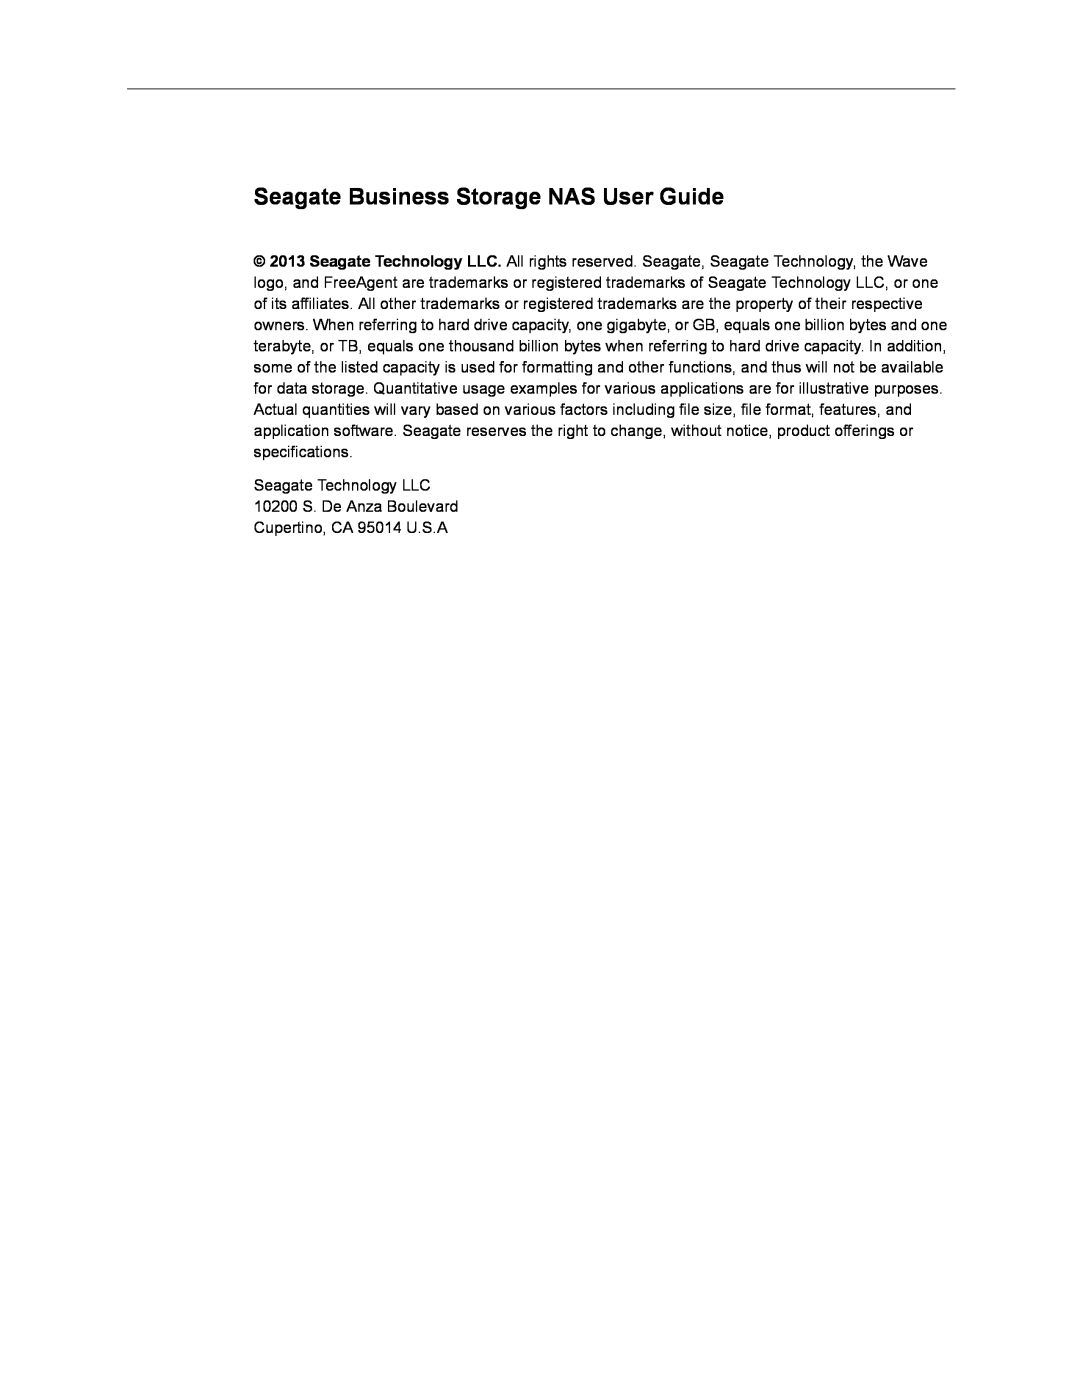 Seagate STBM2000100, STBM3000100, STBP100, STBM4000100 manual Seagate Business Storage NAS User Guide 